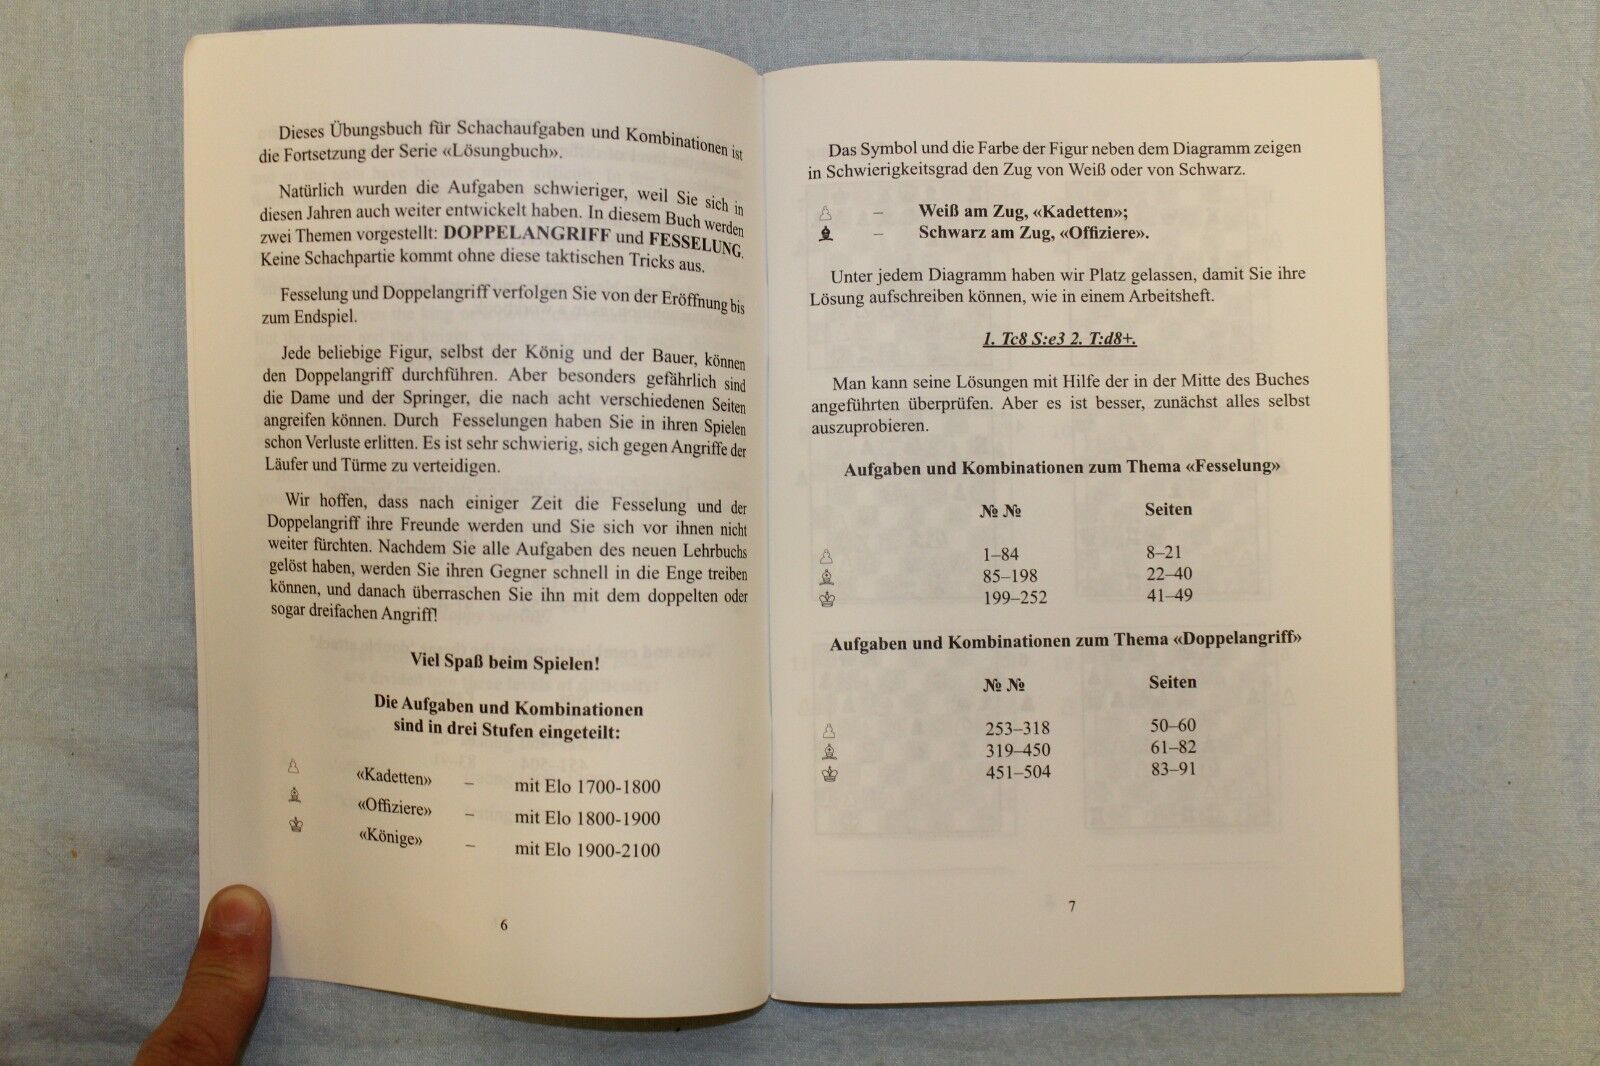 11294.Four Chess Books: 2000 Chess Exercises by V. Kostrov, B. Beliavsky